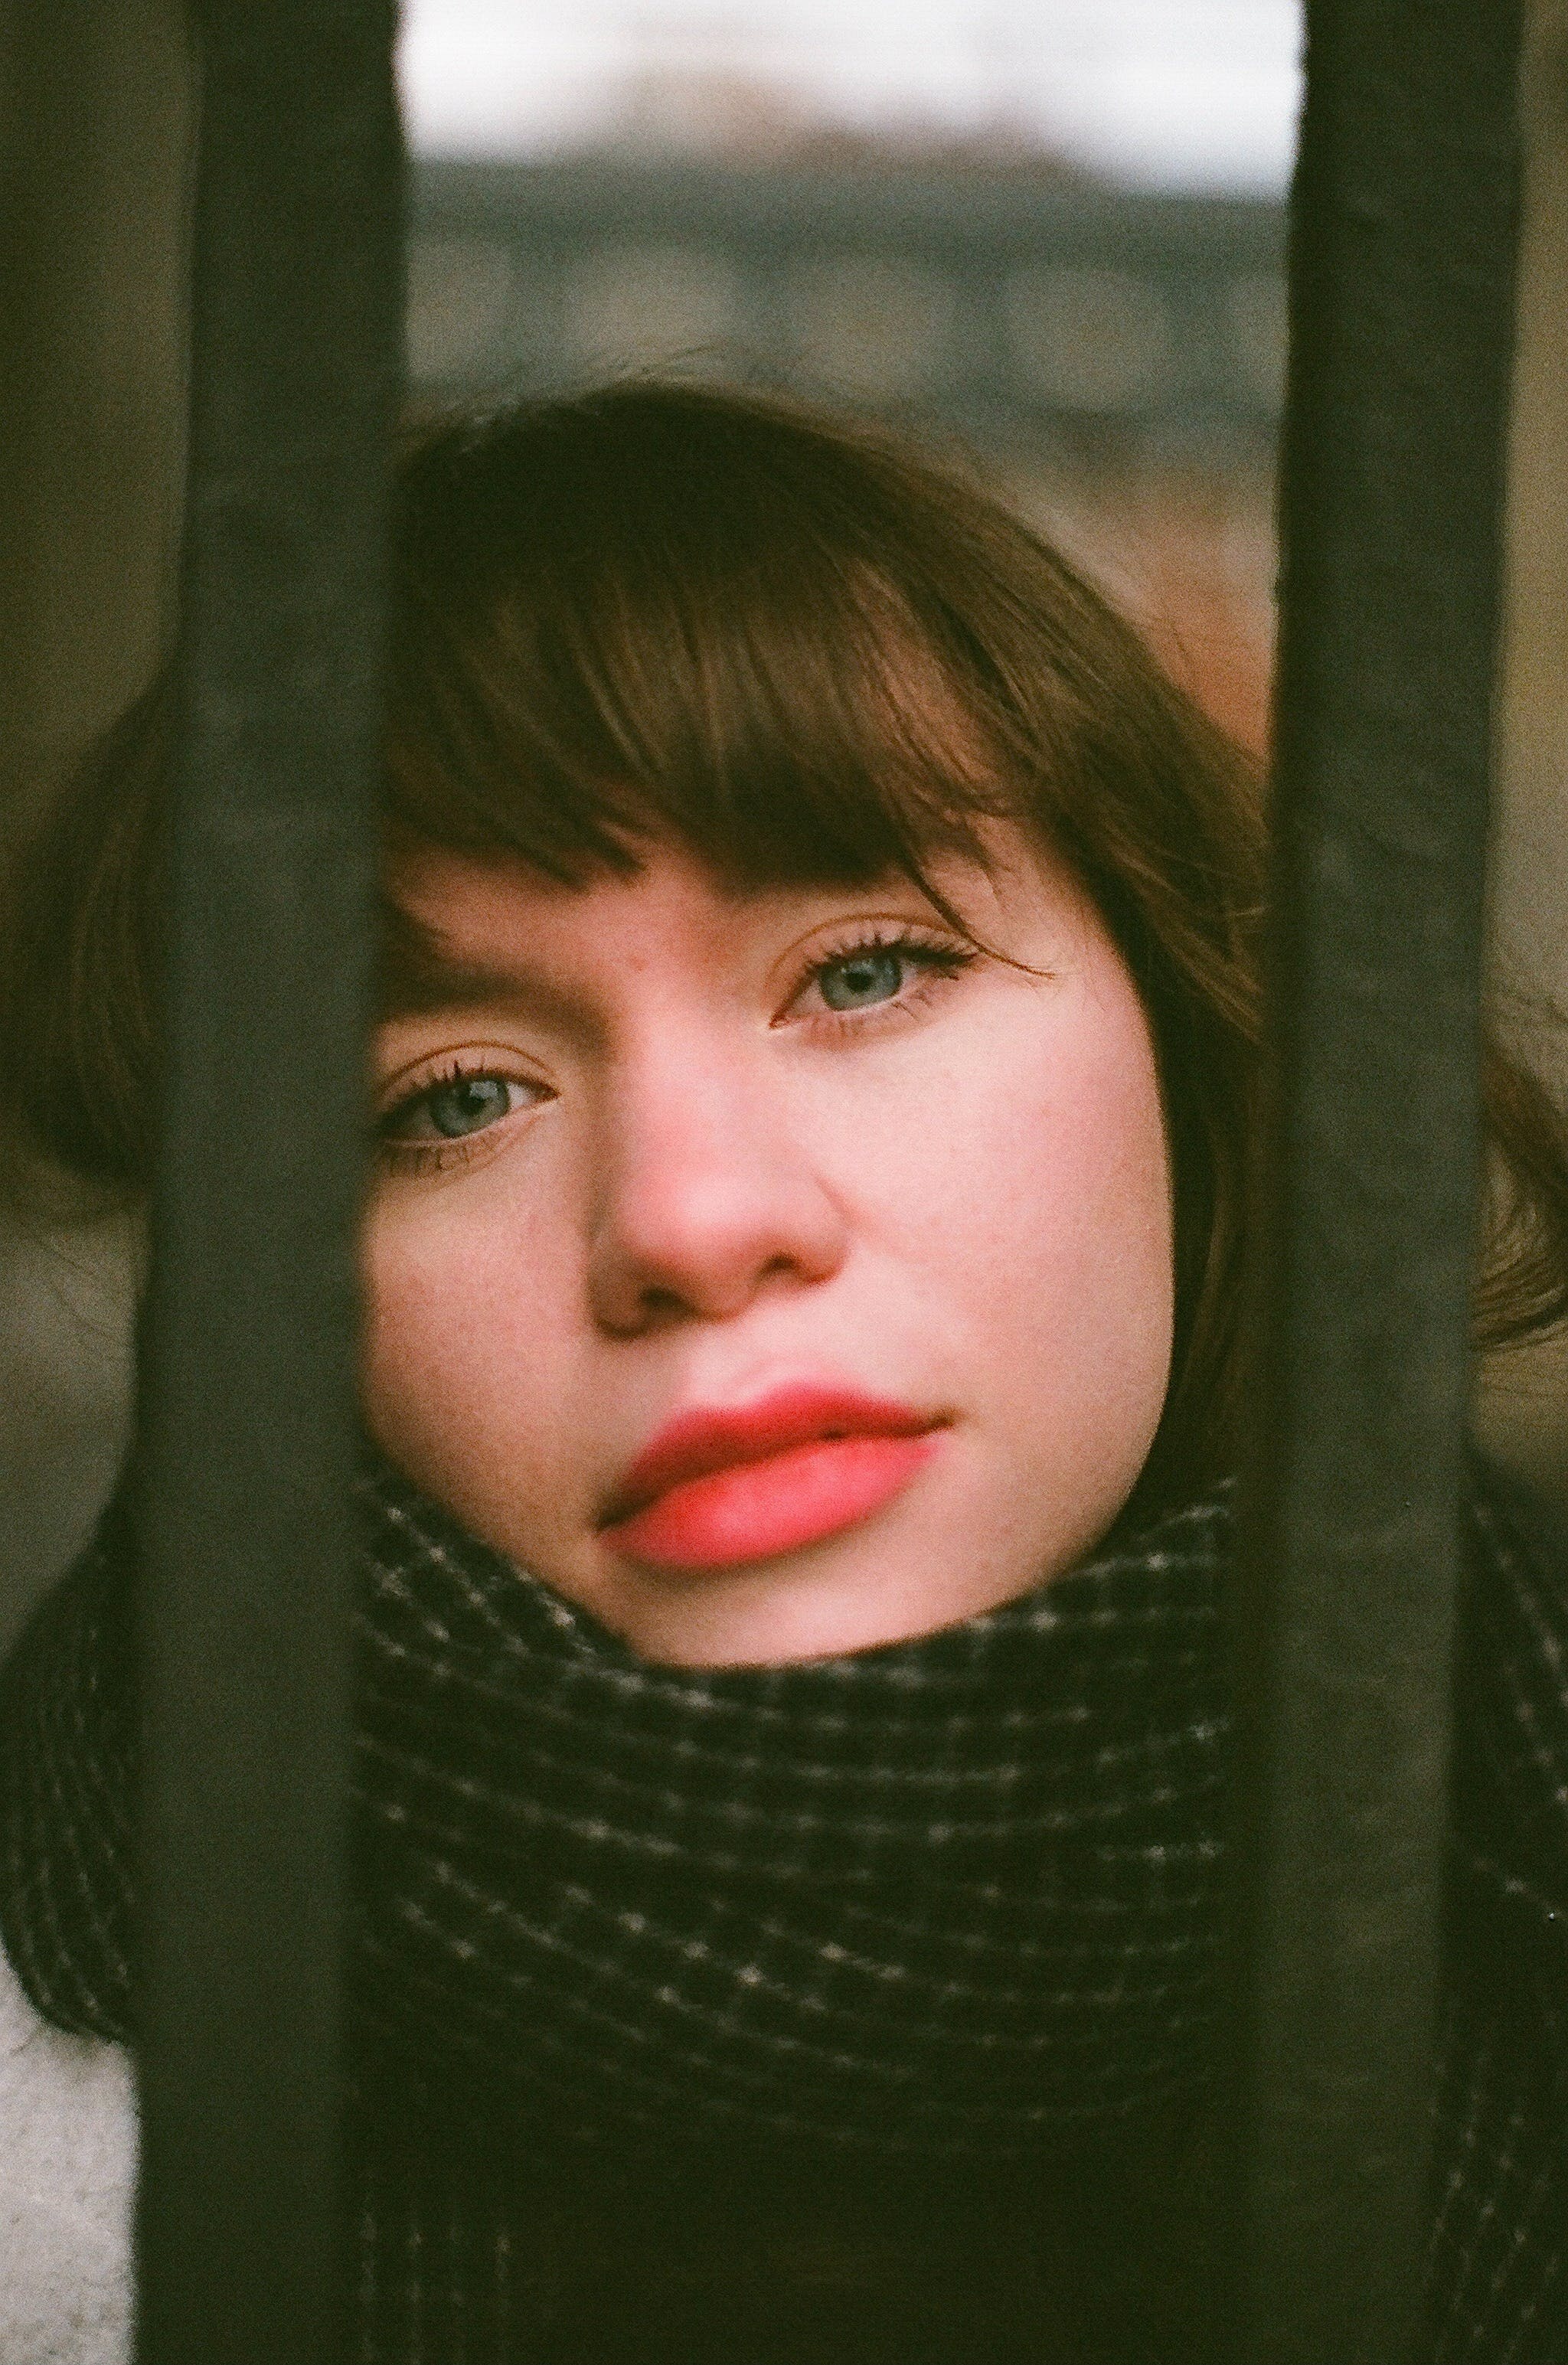 A woman behind bars. | Source: Pexels